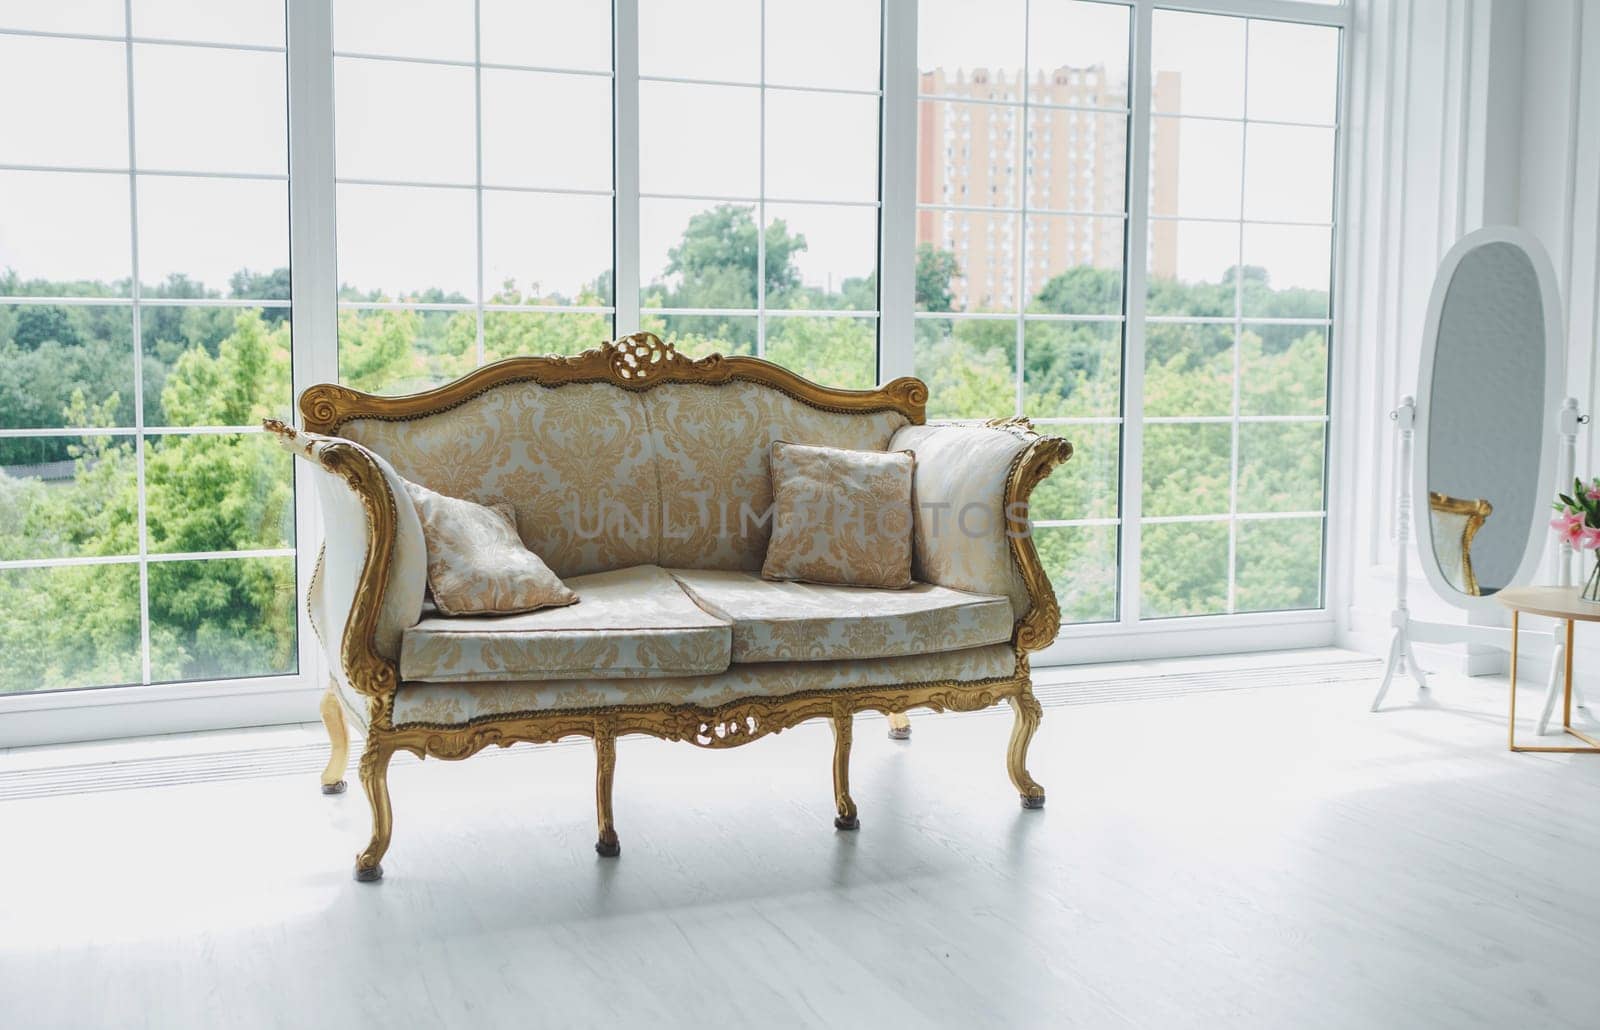 Vintage royal sofa in a room near big window. Classic interior